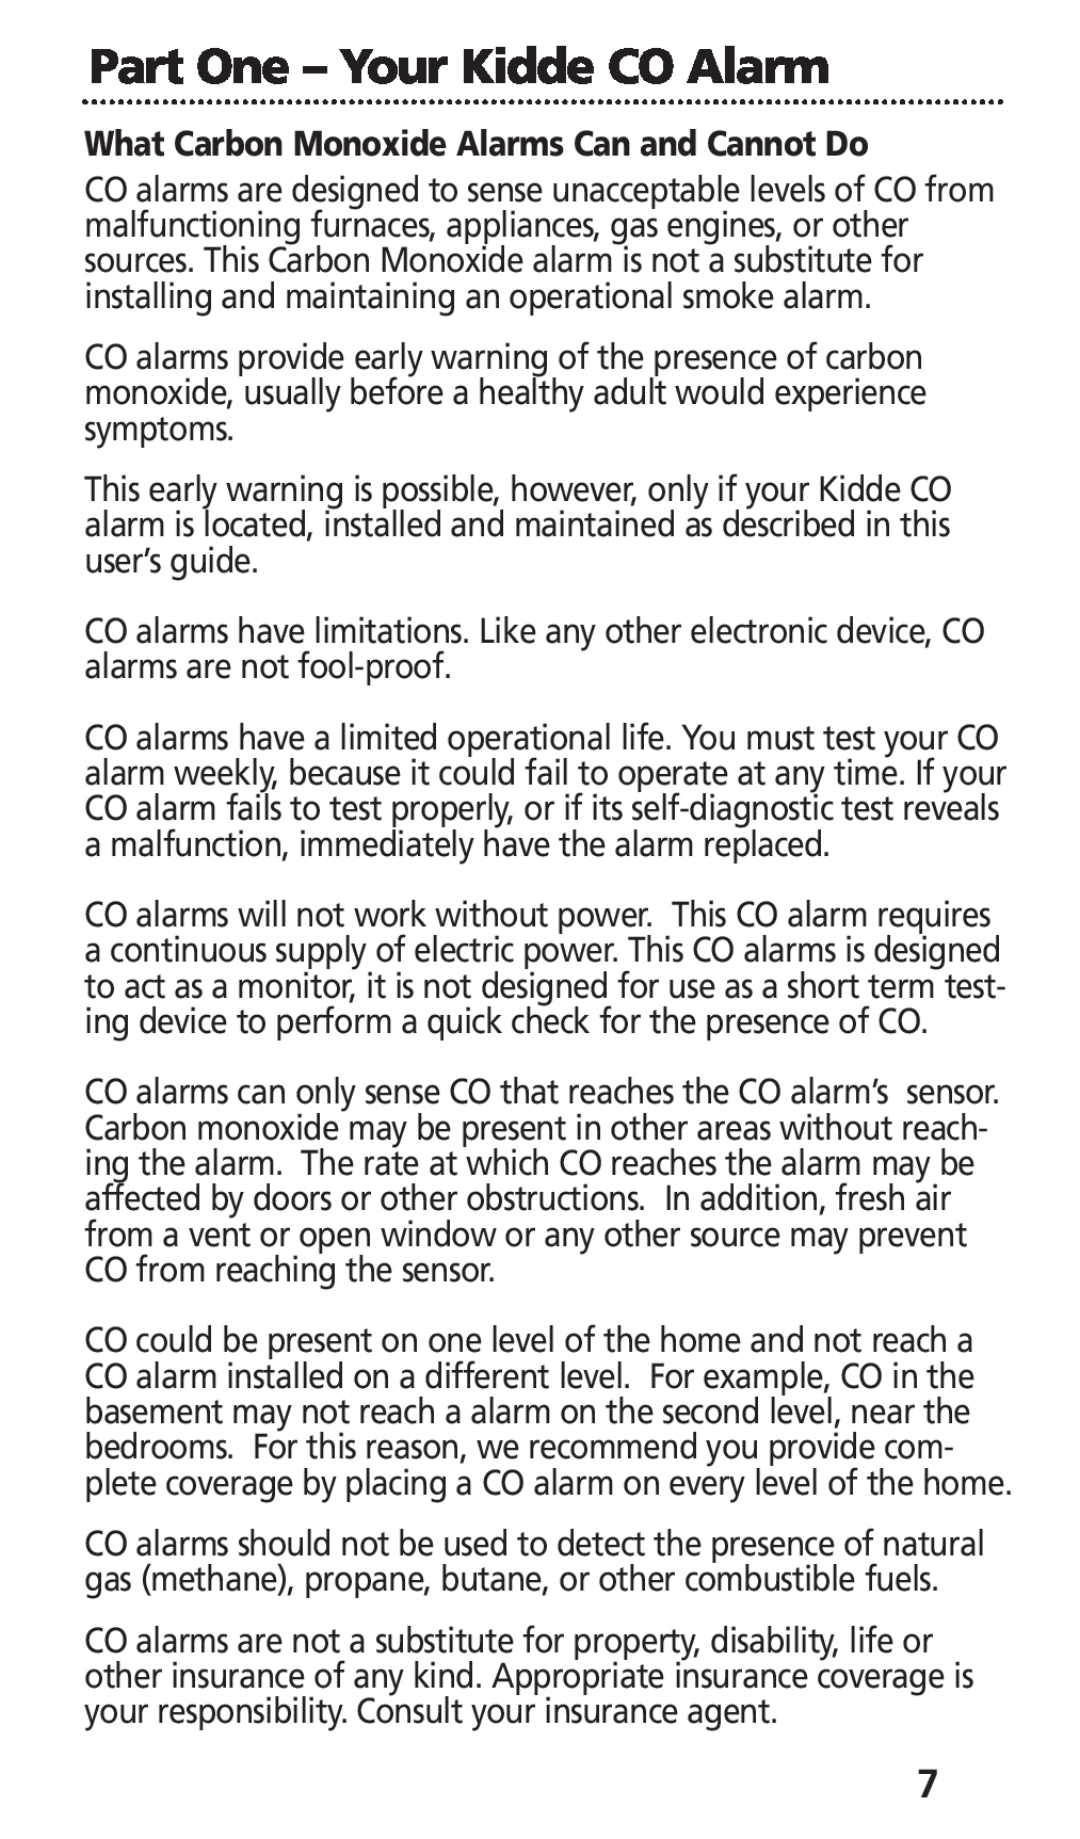 Kidde KN-COB-LCB-A, KN-COB-DP-H manual What Carbon Monoxide Alarms Can and Cannot Do, Part One - Your Kidde CO Alarm 